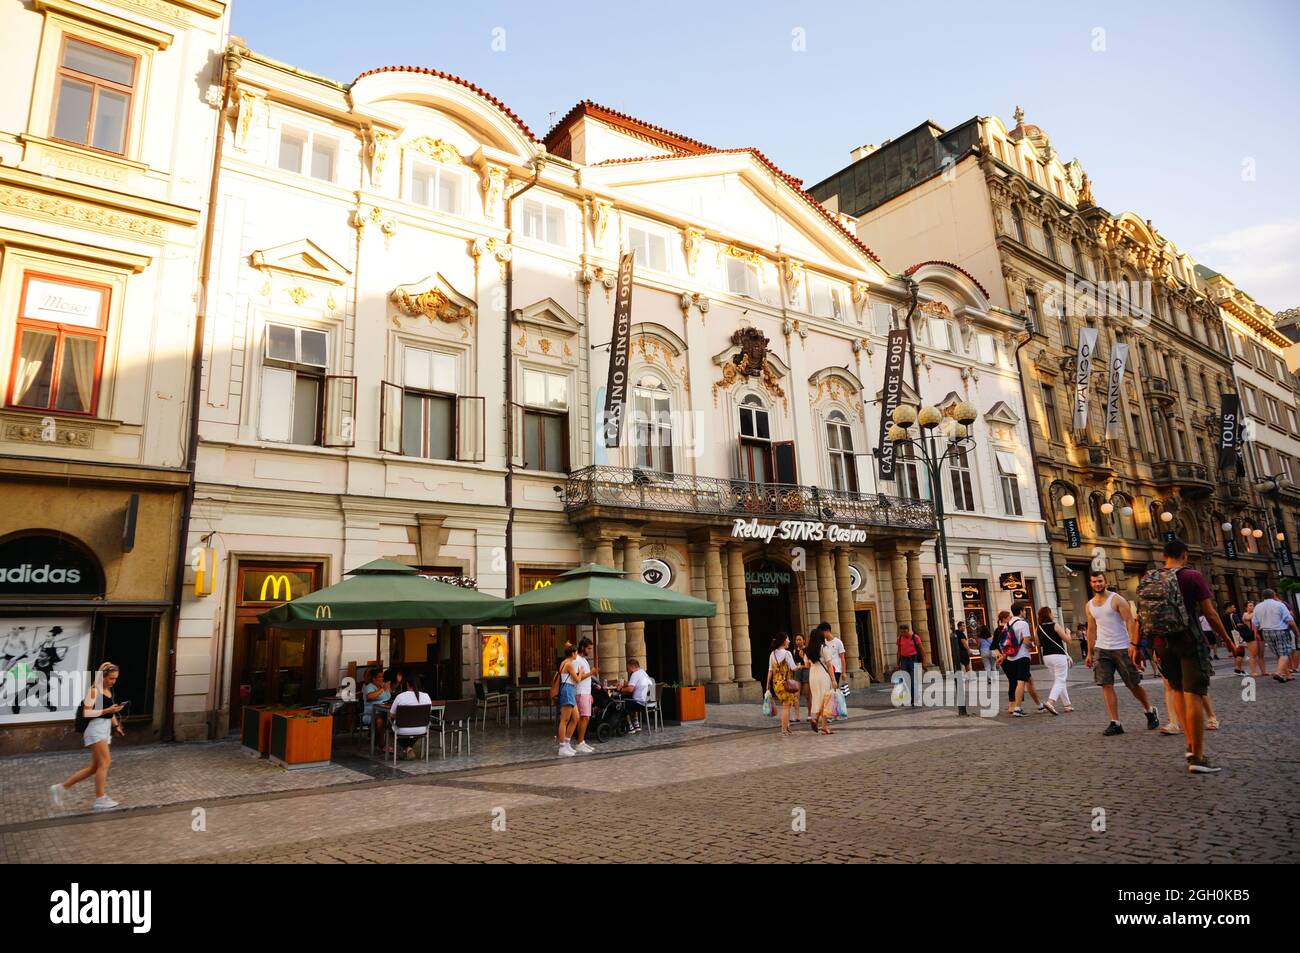 PRAGUE, CZECH REPUBLIC - Jul 26, 2019: Many people sitting at McDonald's fast-food restaurant in Prague, Czech Republic Stock Photo